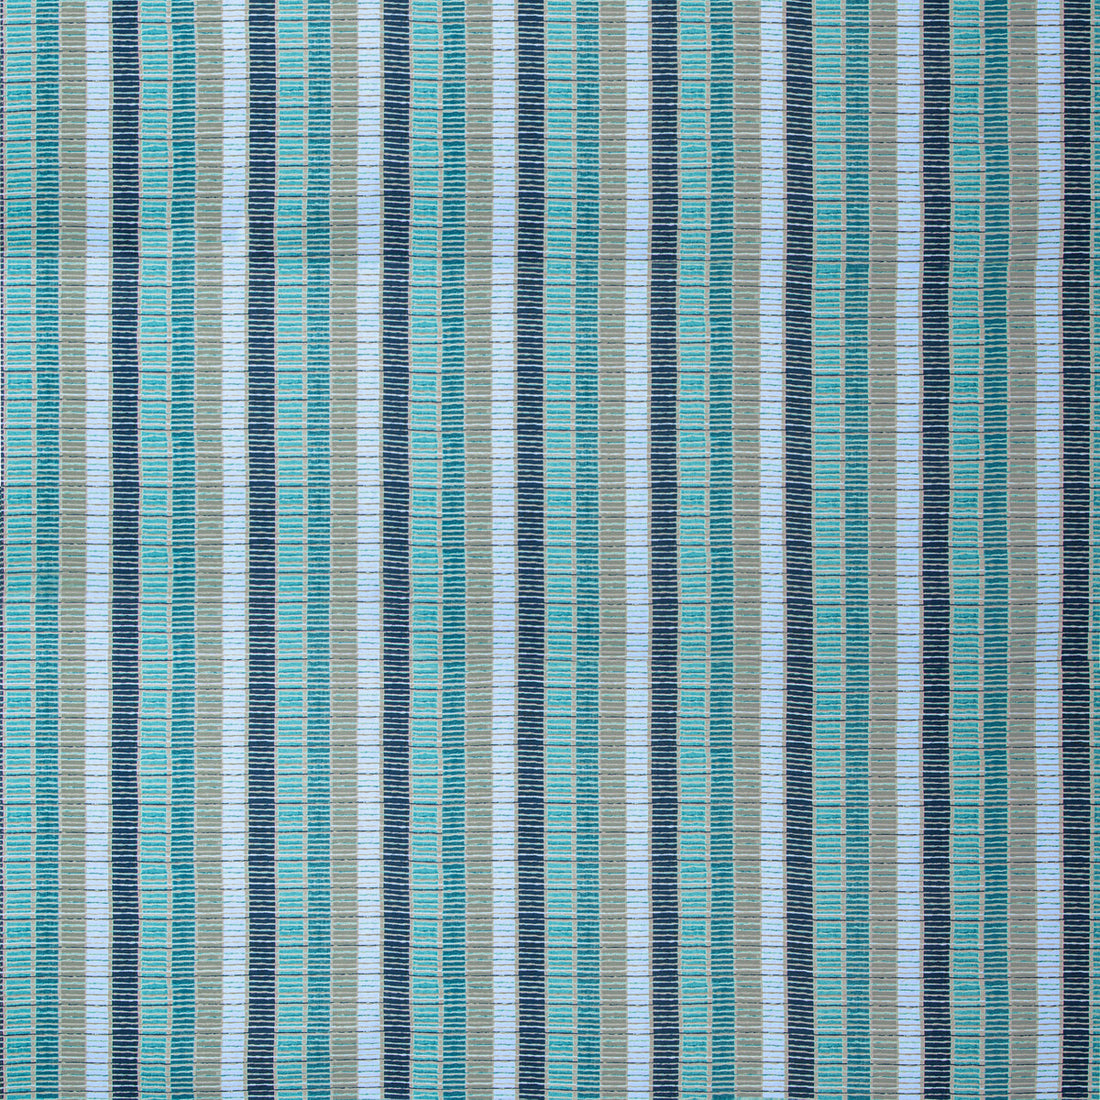 Lj Grw fabric - pattern 2019148.505.0 - by Lee Jofa Modern in the Kw Terra Firma III Indoor Outdoor collection